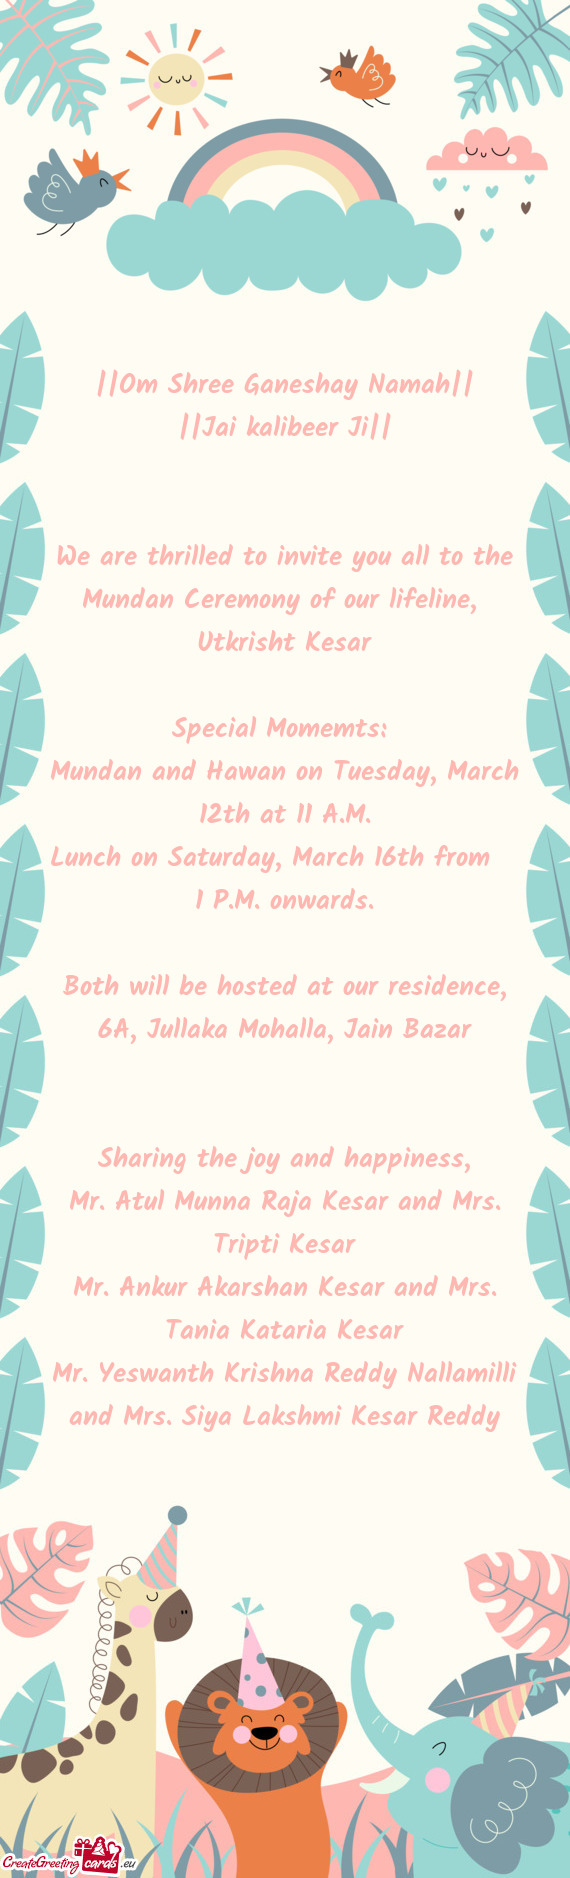 Mundan and Hawan on Tuesday, March 12th at 11 A.M